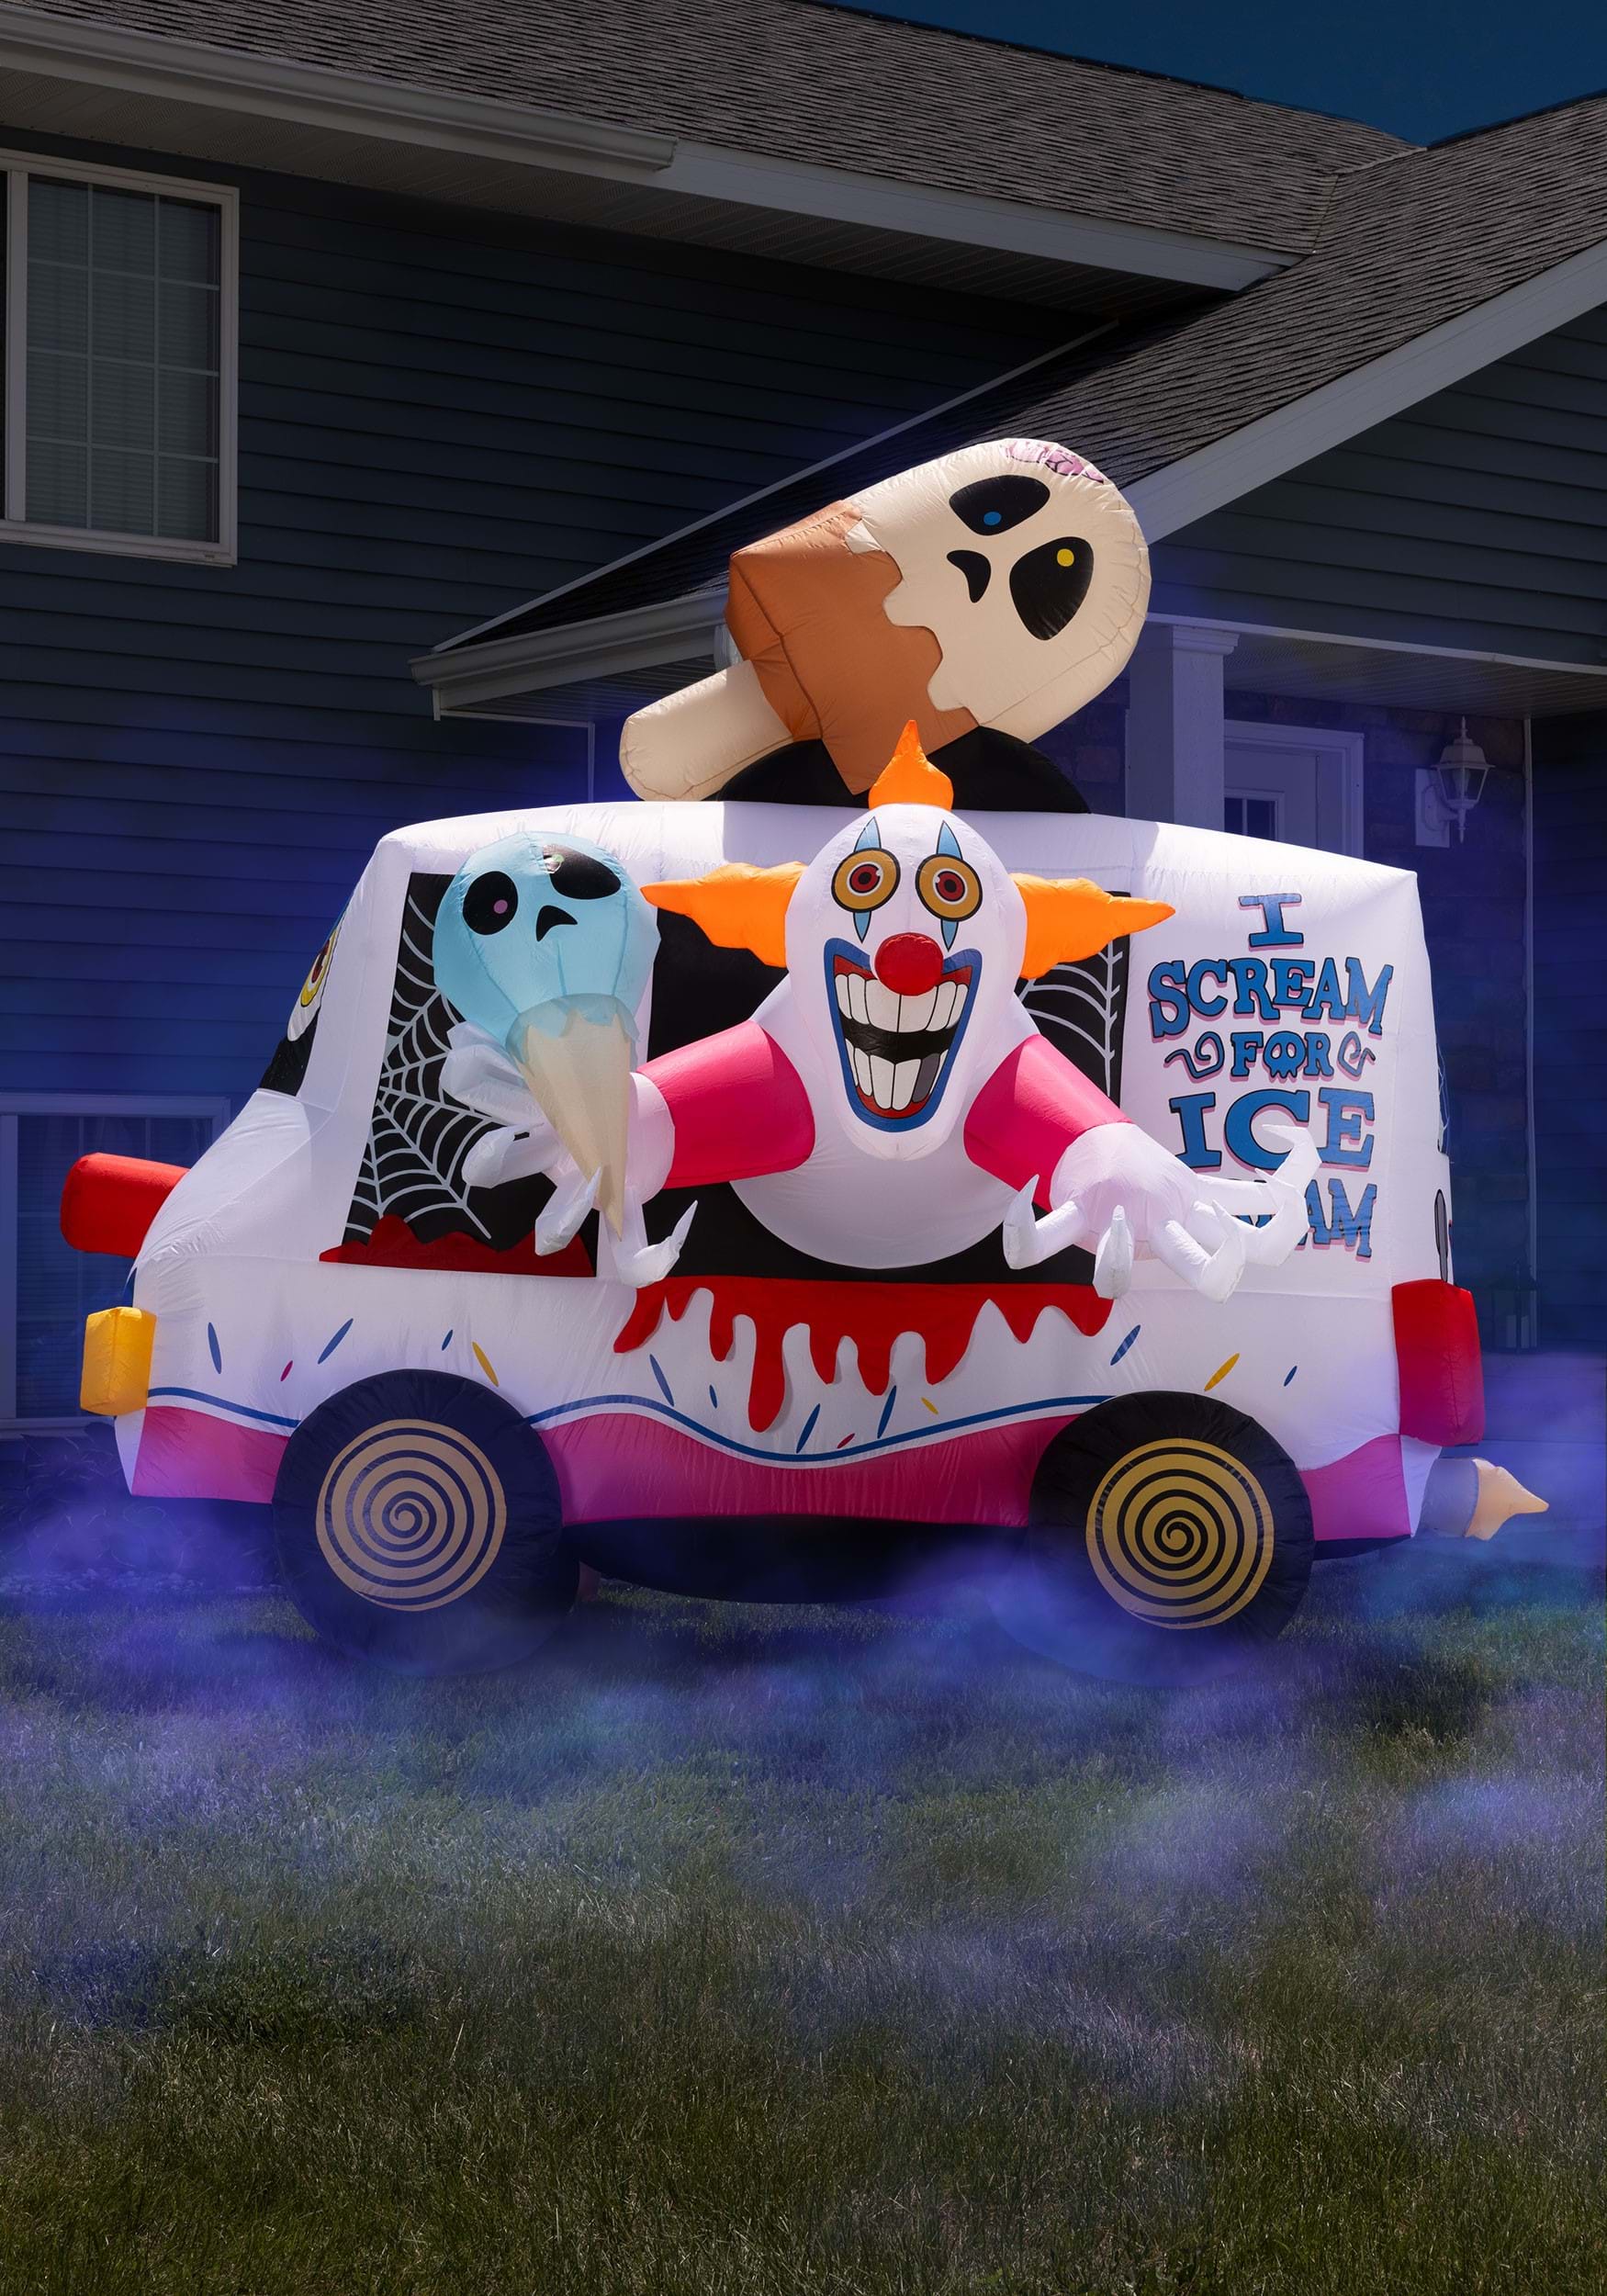 https://images.halloweencostumes.com/products/87420/1-1/sweet-shrieks-killer-clown-ice-cream-truck-inflatable-new.jpg